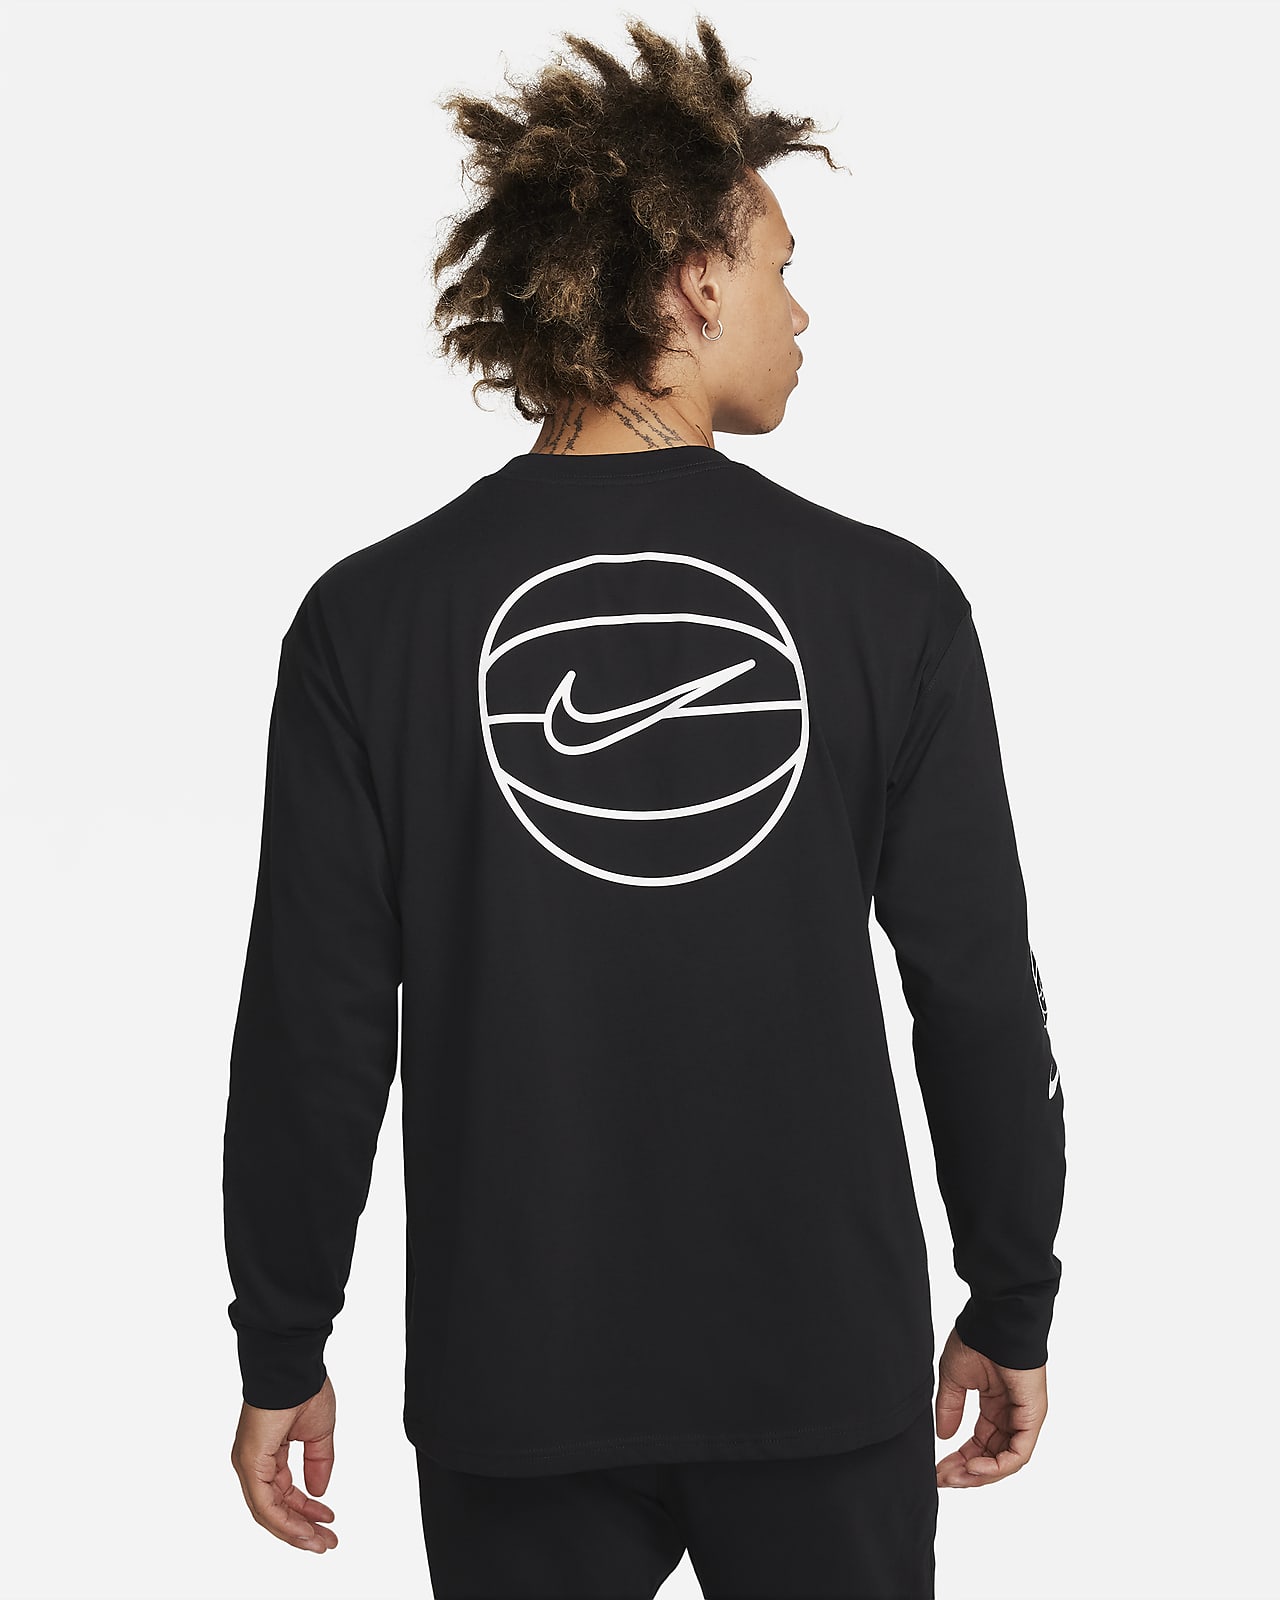 Nike Long Sleeve Basketball T-Shirt - Men's 